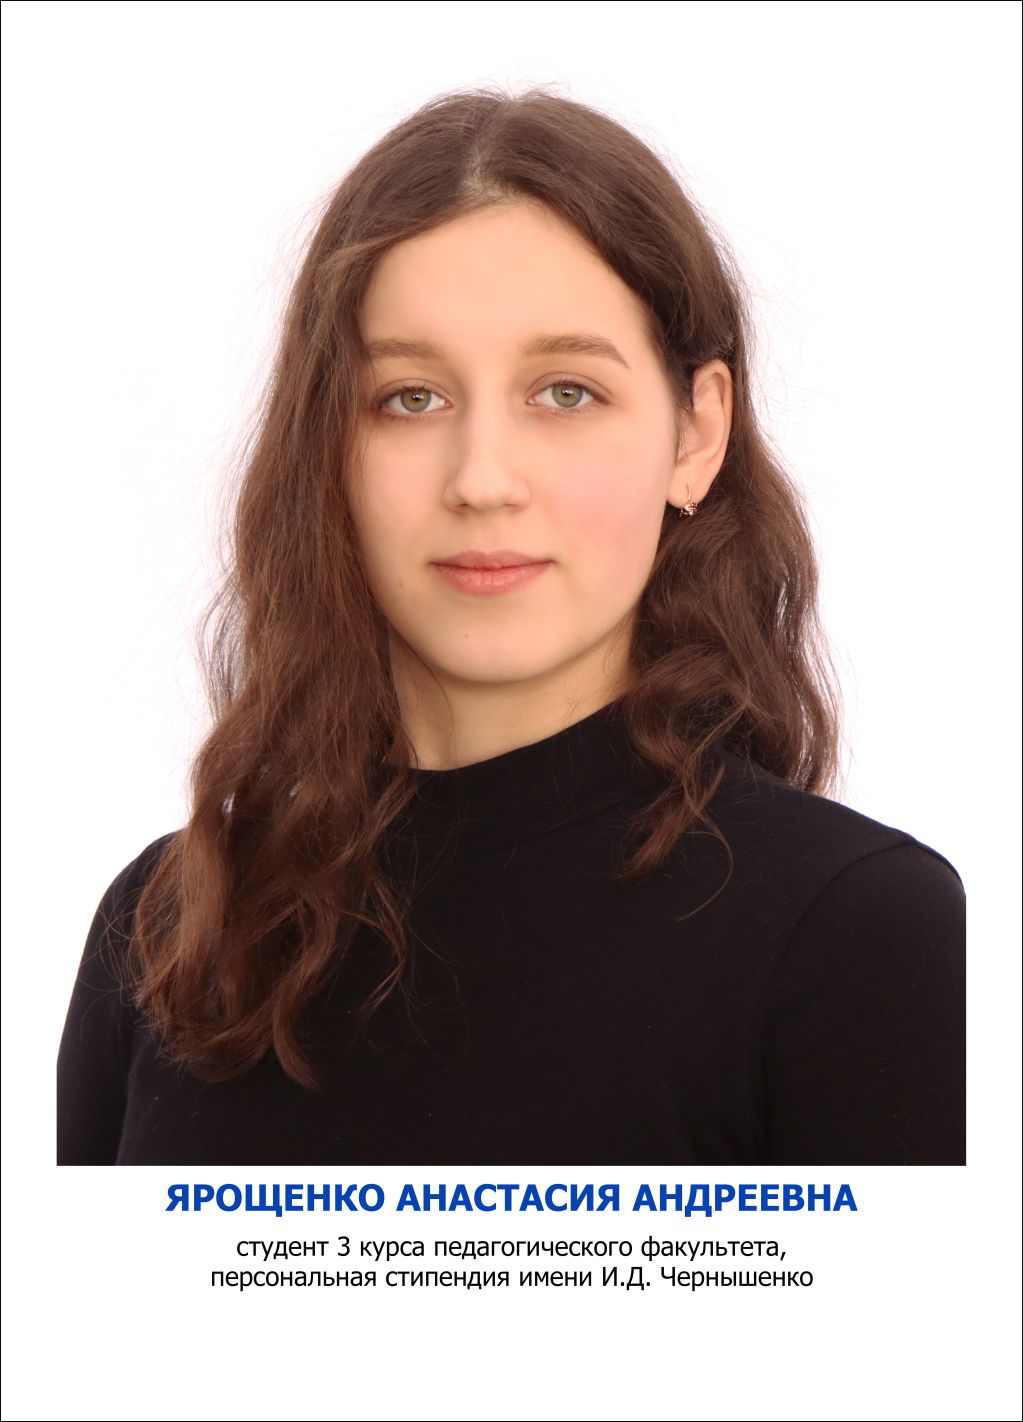 Ярощенко Анастасия Андреевна